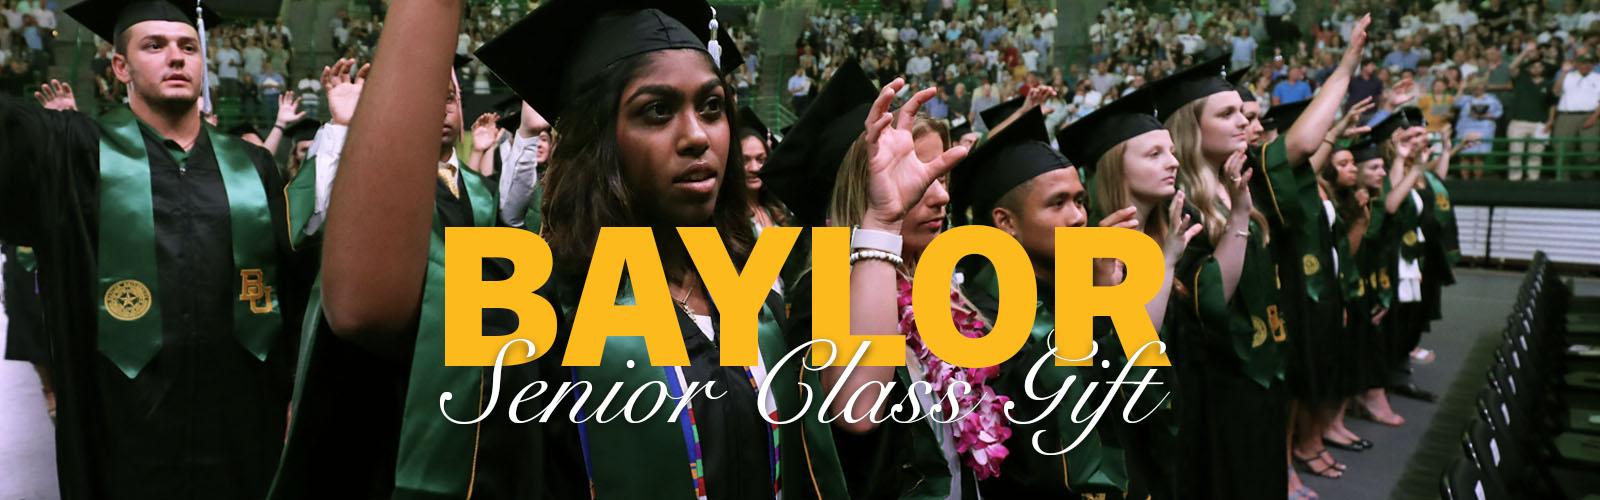 Baylor Senior Class Gift, image of student graduates